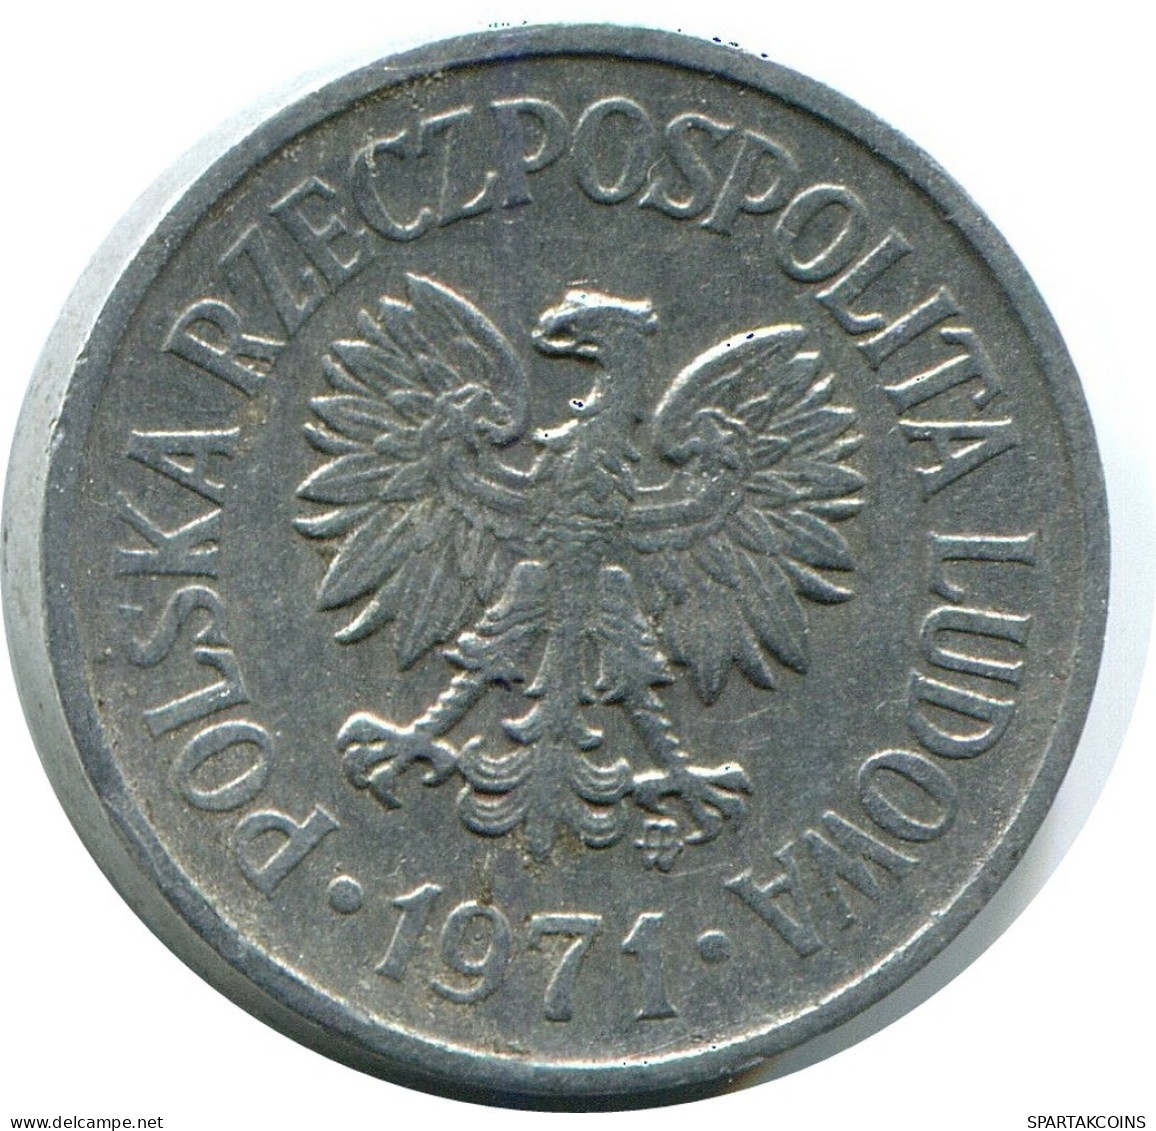 10 GROSZY 1971 POLAND Coin #AZ319.U.A - Poland